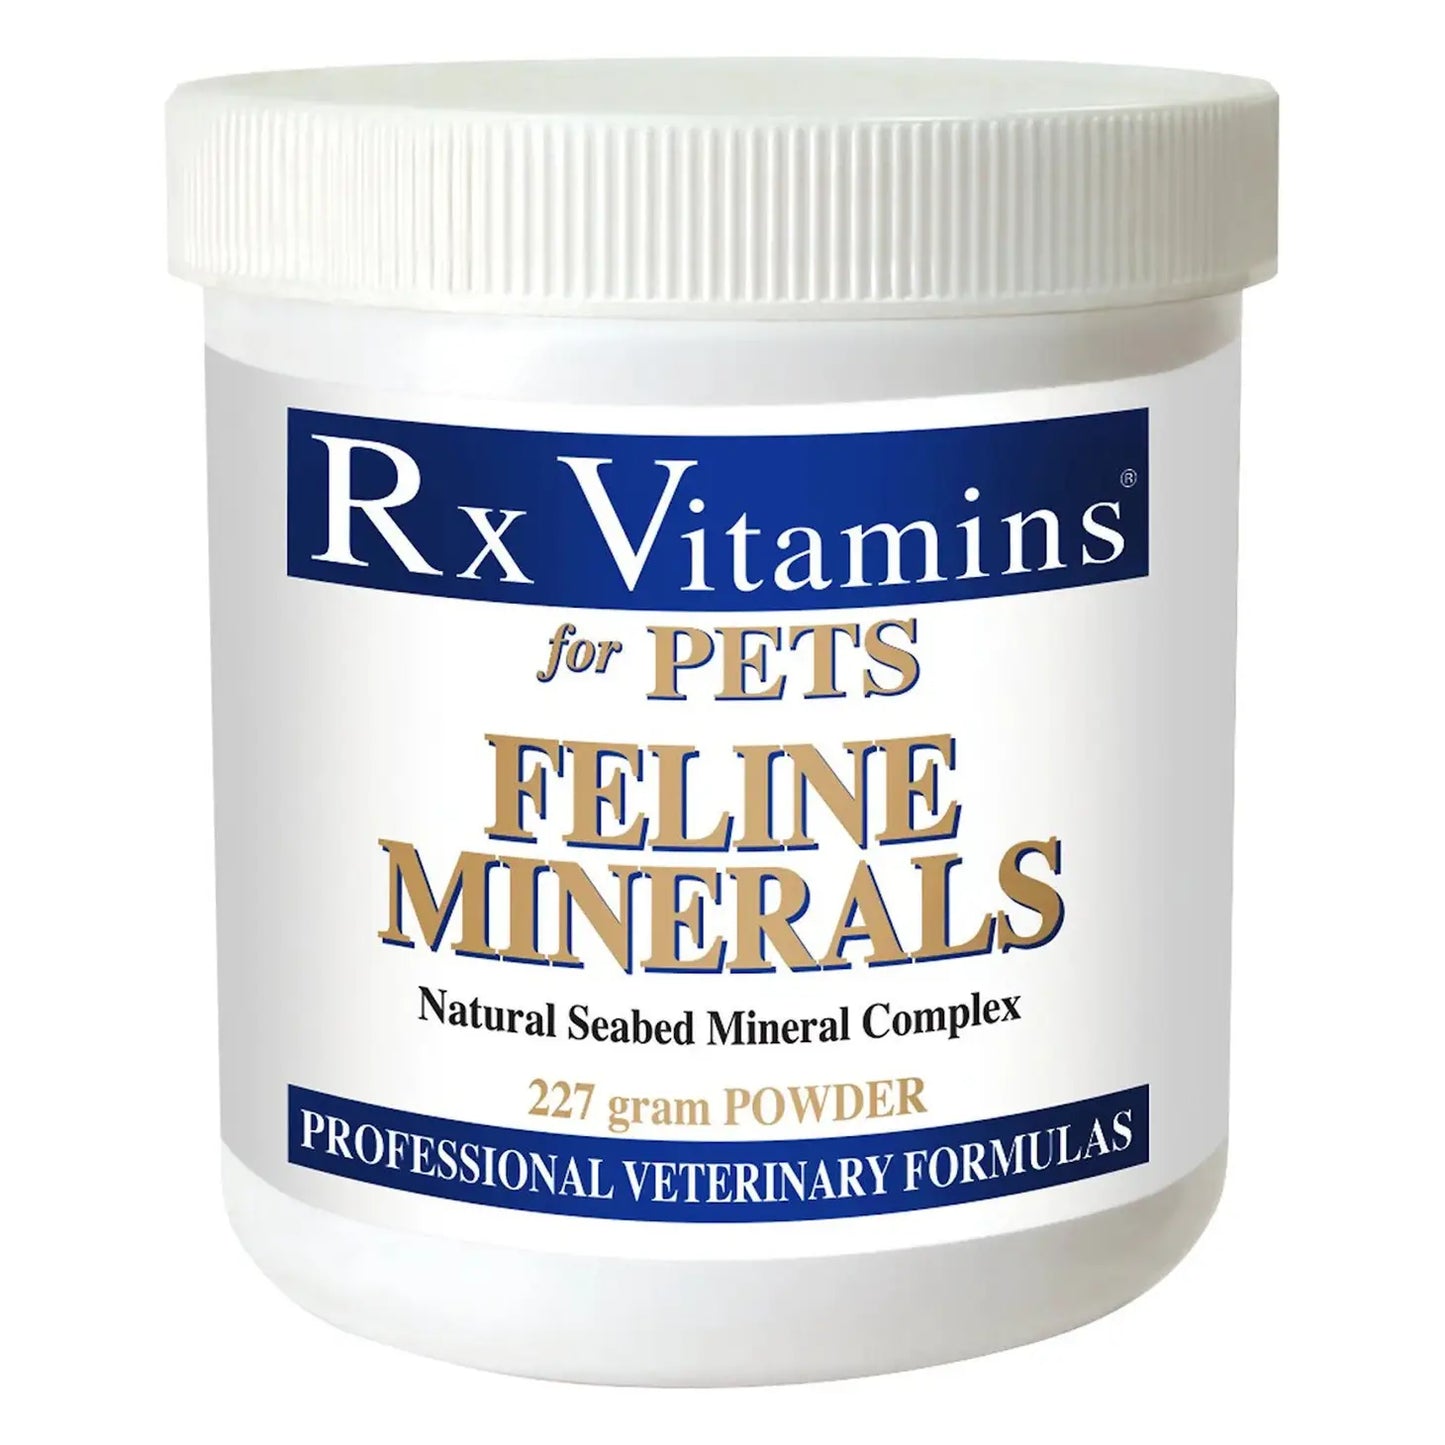 Feline Minerals Powder Supplement for Cats